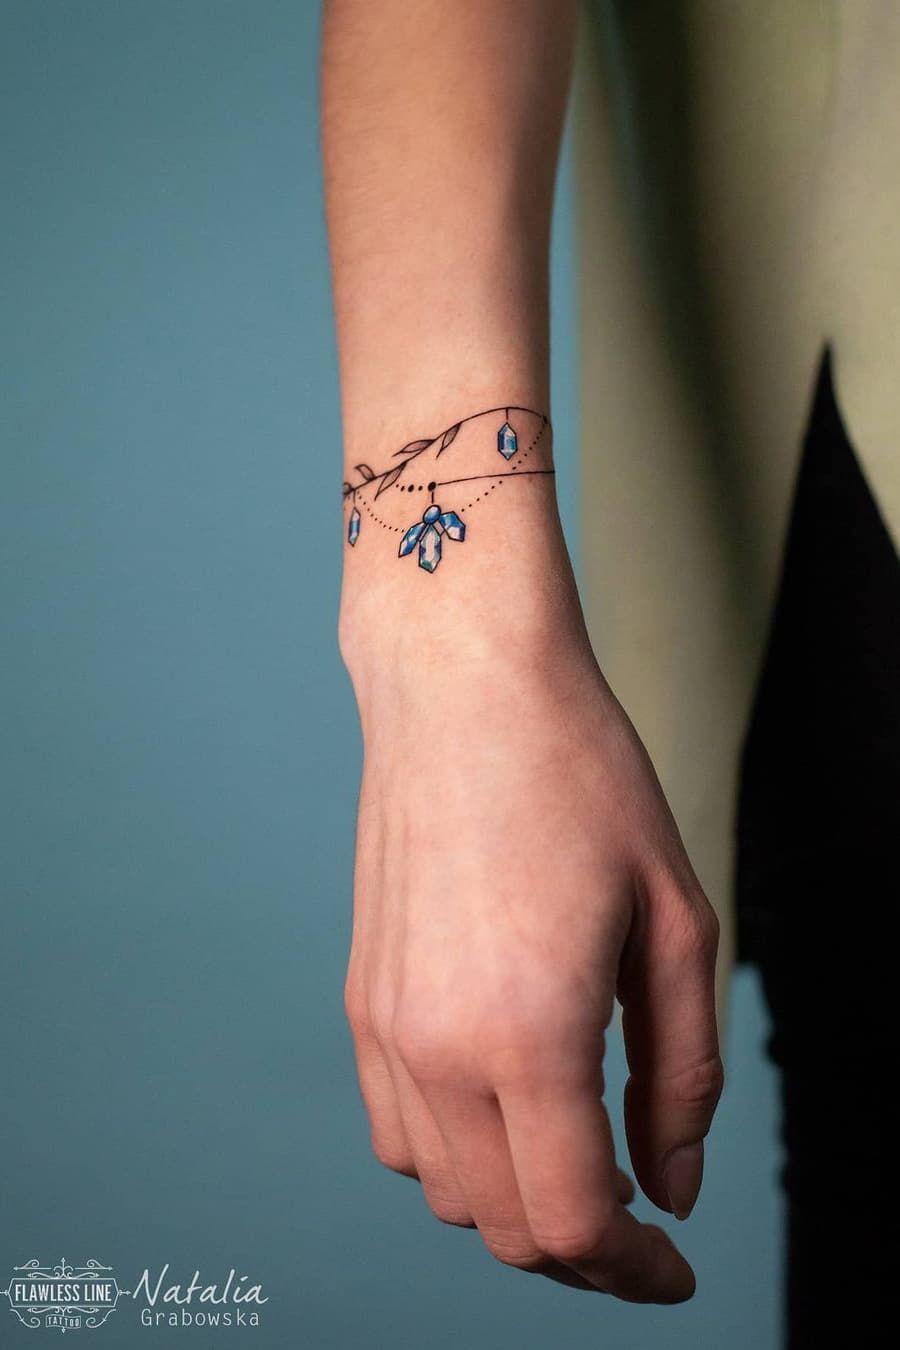 Ankle Bracelet Tattoos